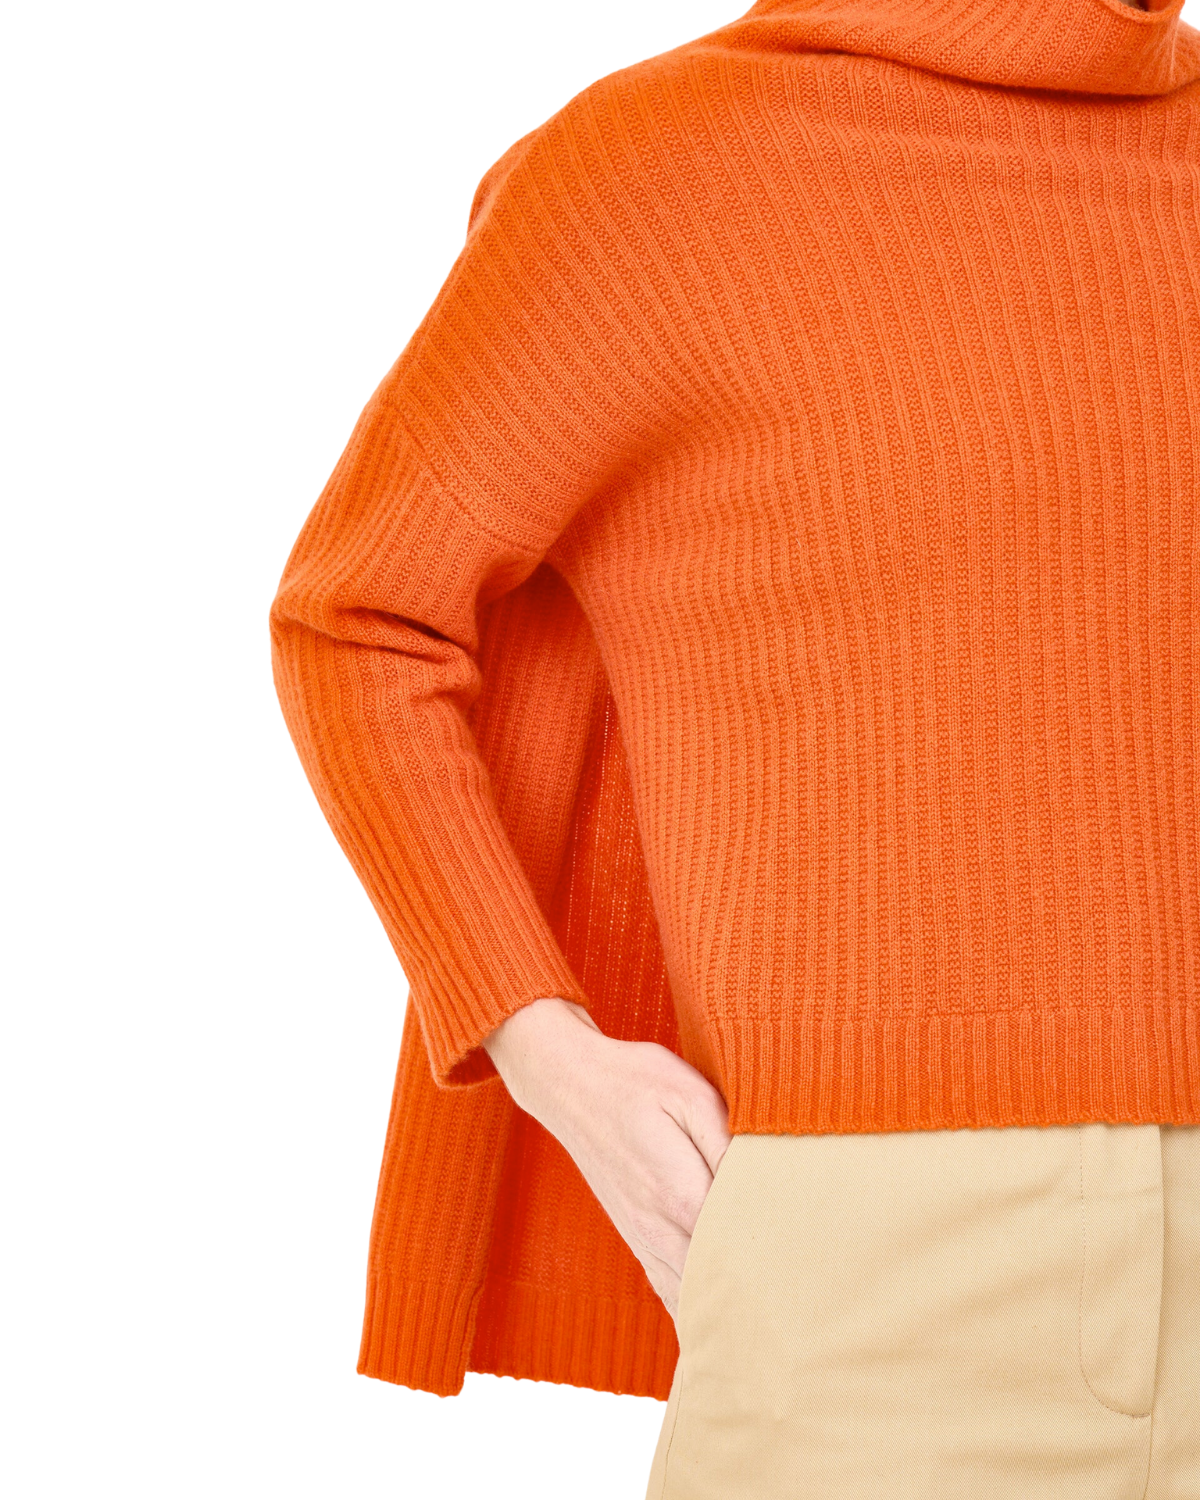 Everly Sweater (Orange)